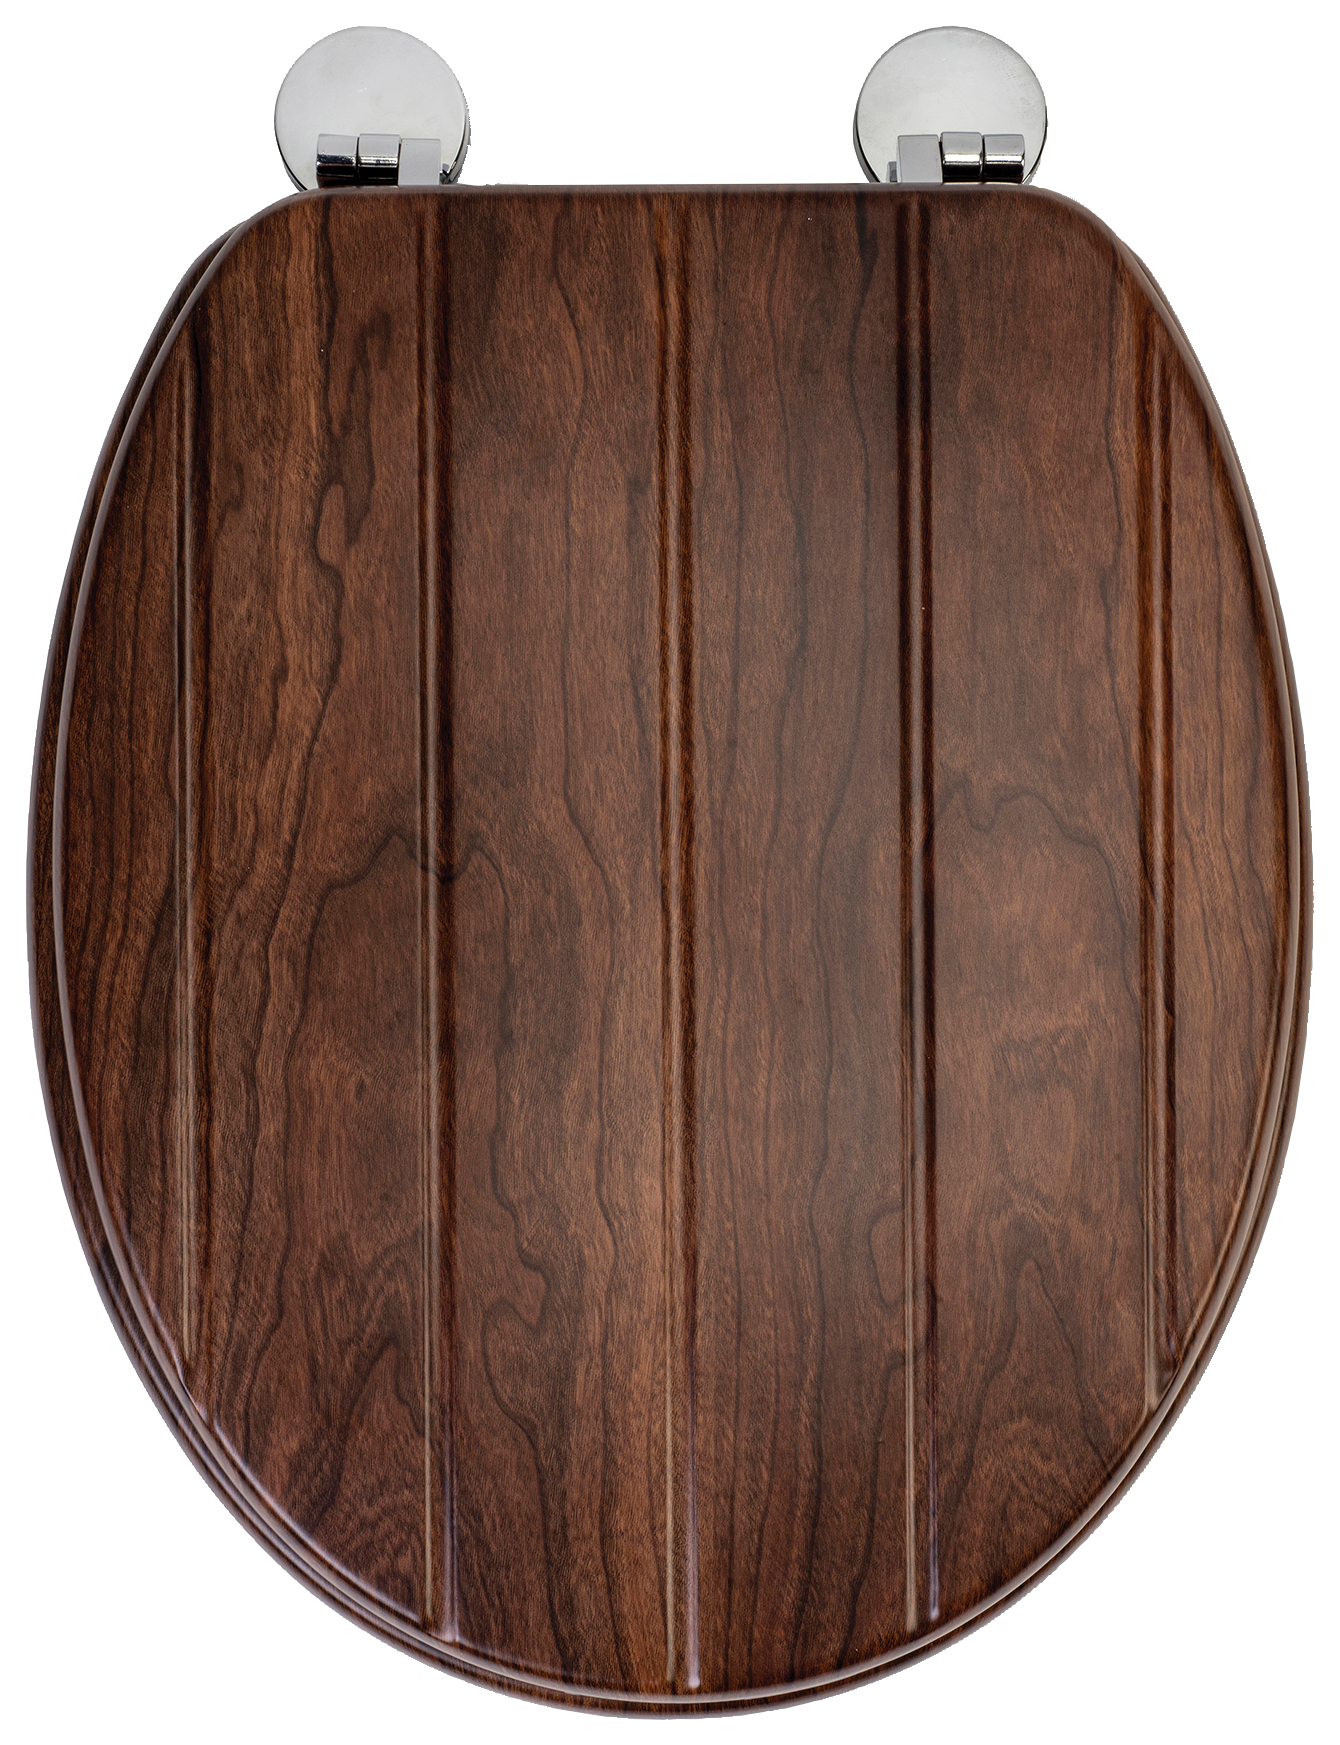 Croydex Molvena Flexi Fix Wooden Tongue & Groove Standard Close Toilet Seat - Walnut Effect